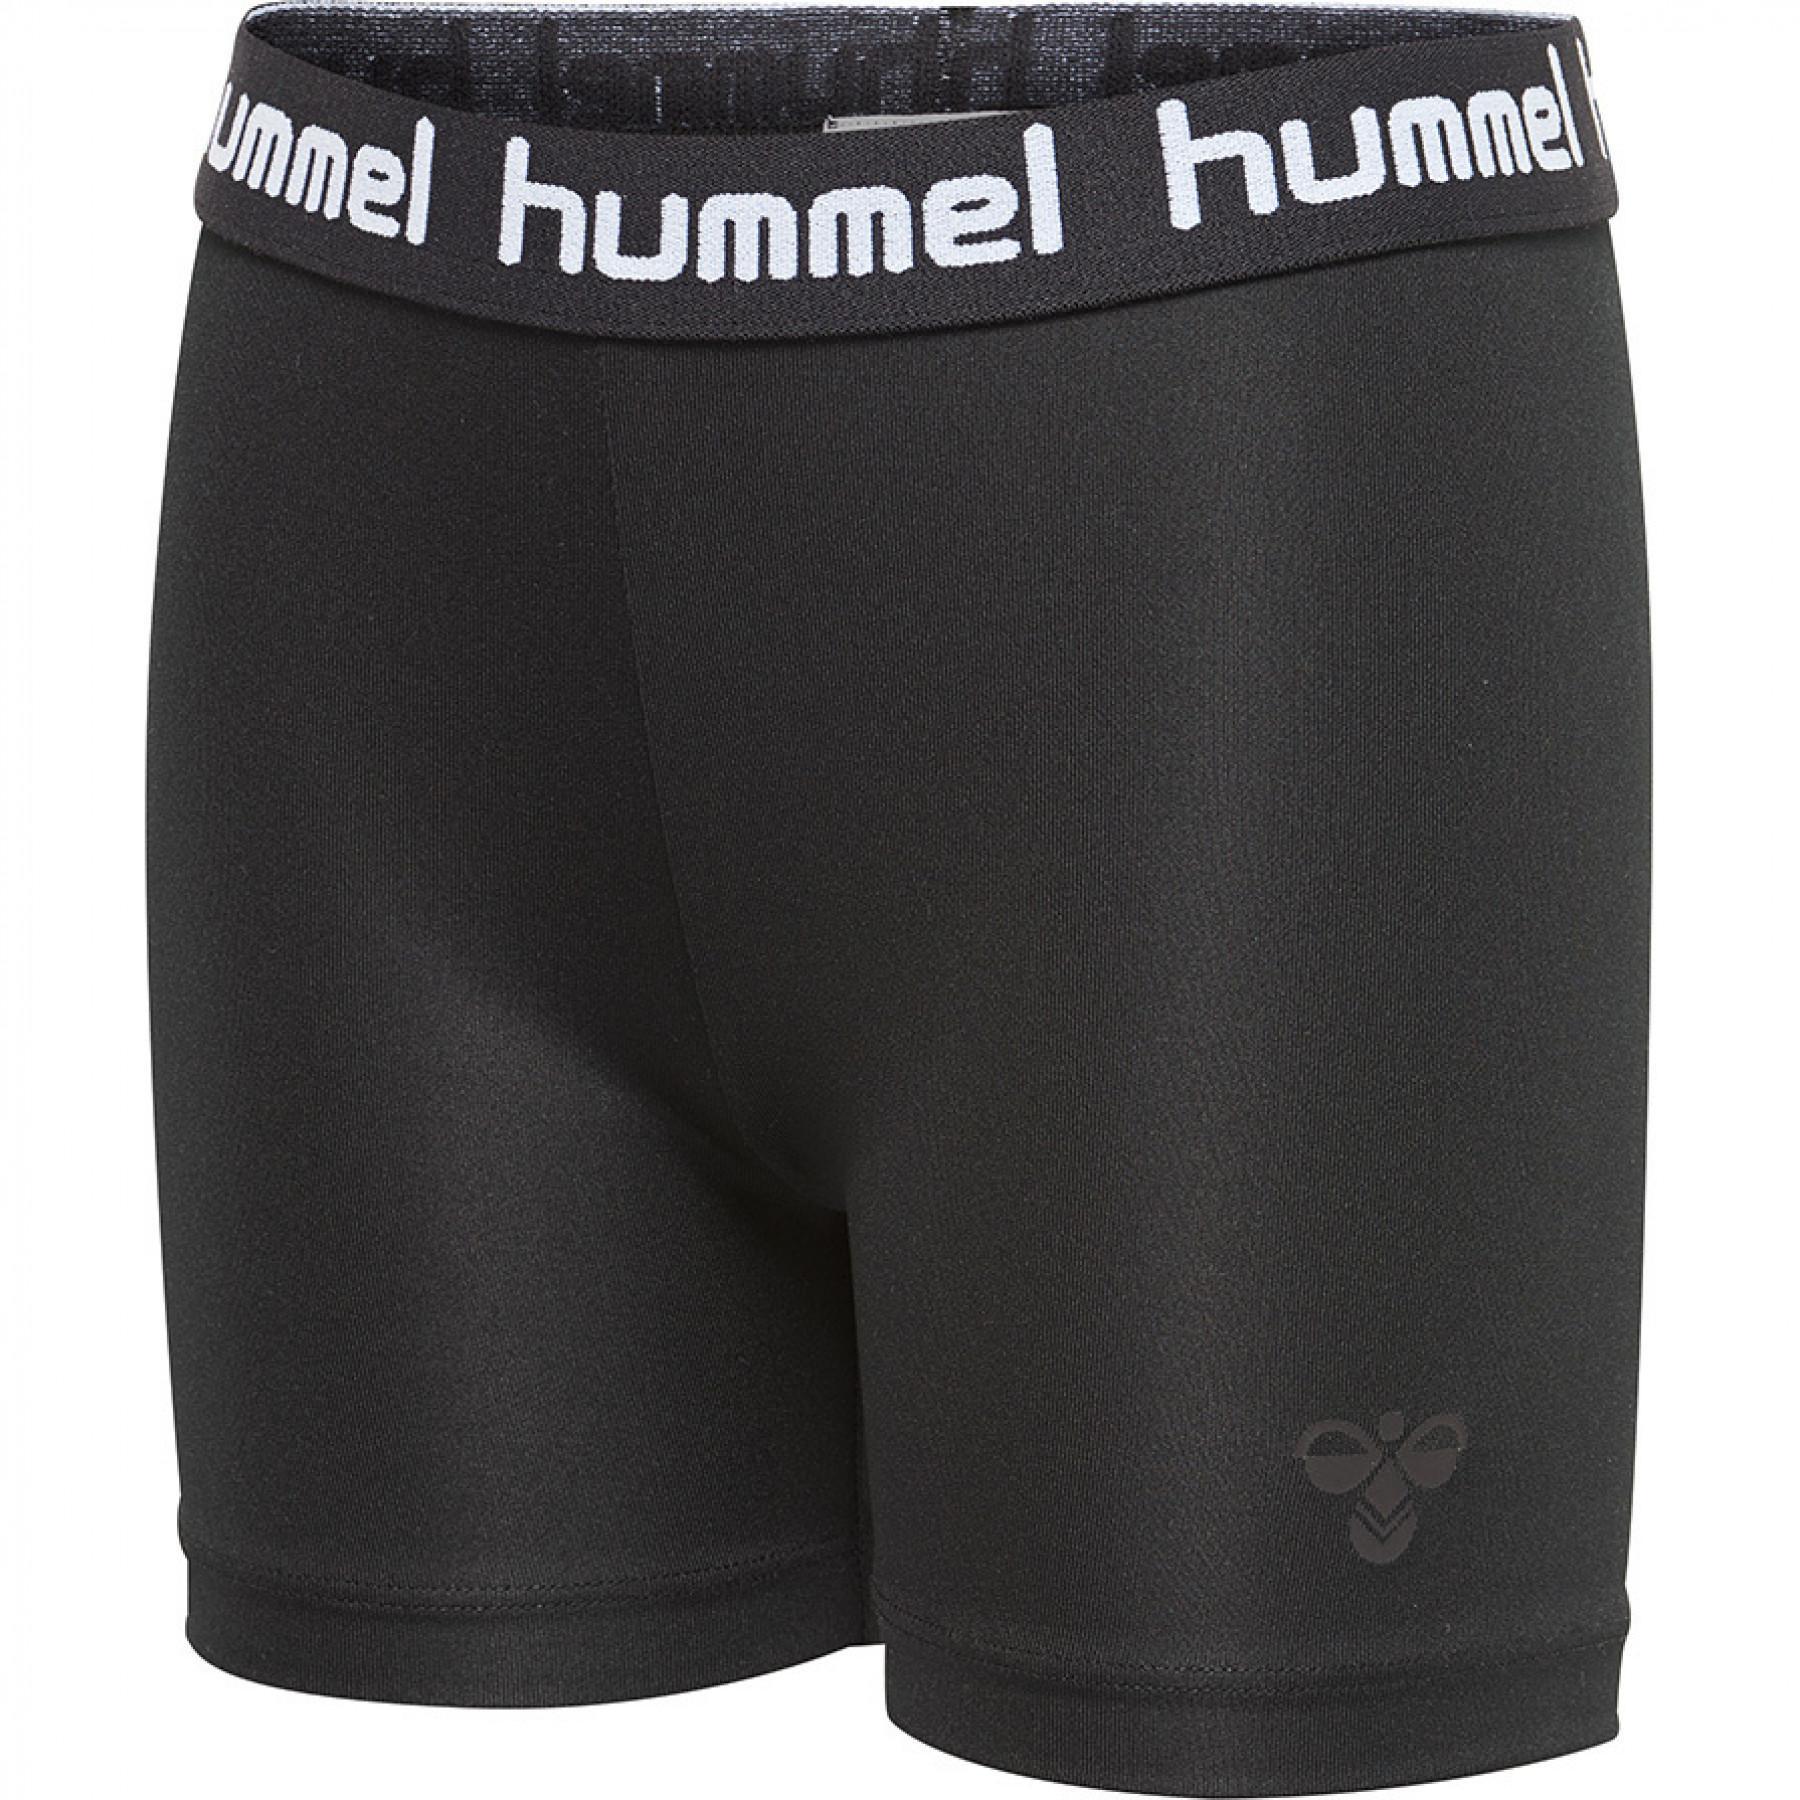 Kid shorts Hummel hmltona